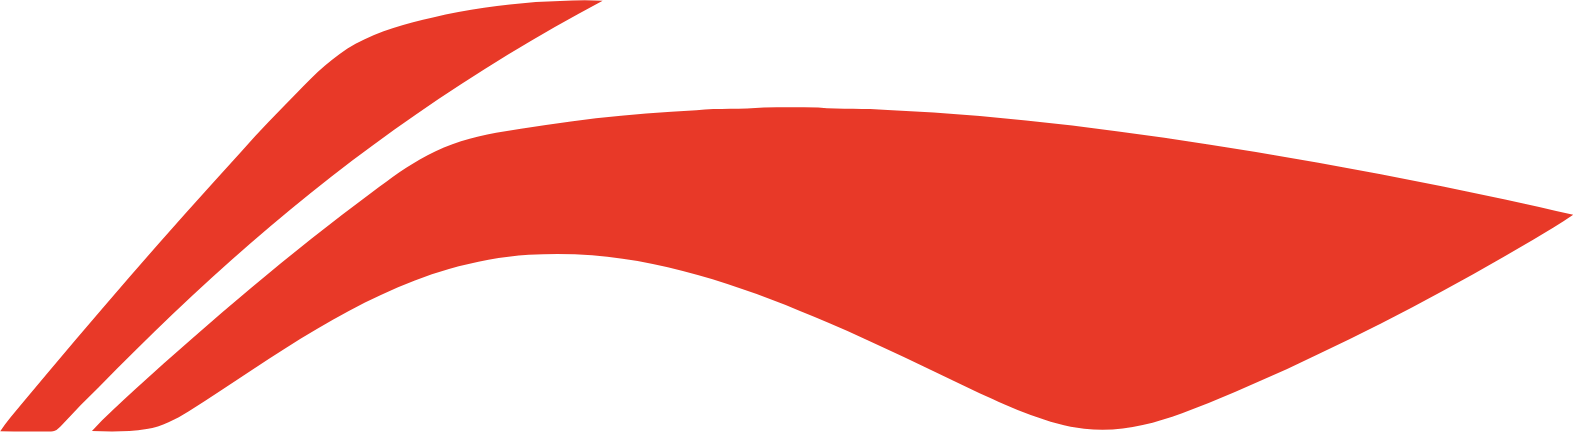 Li Ning Company logo (transparent PNG)